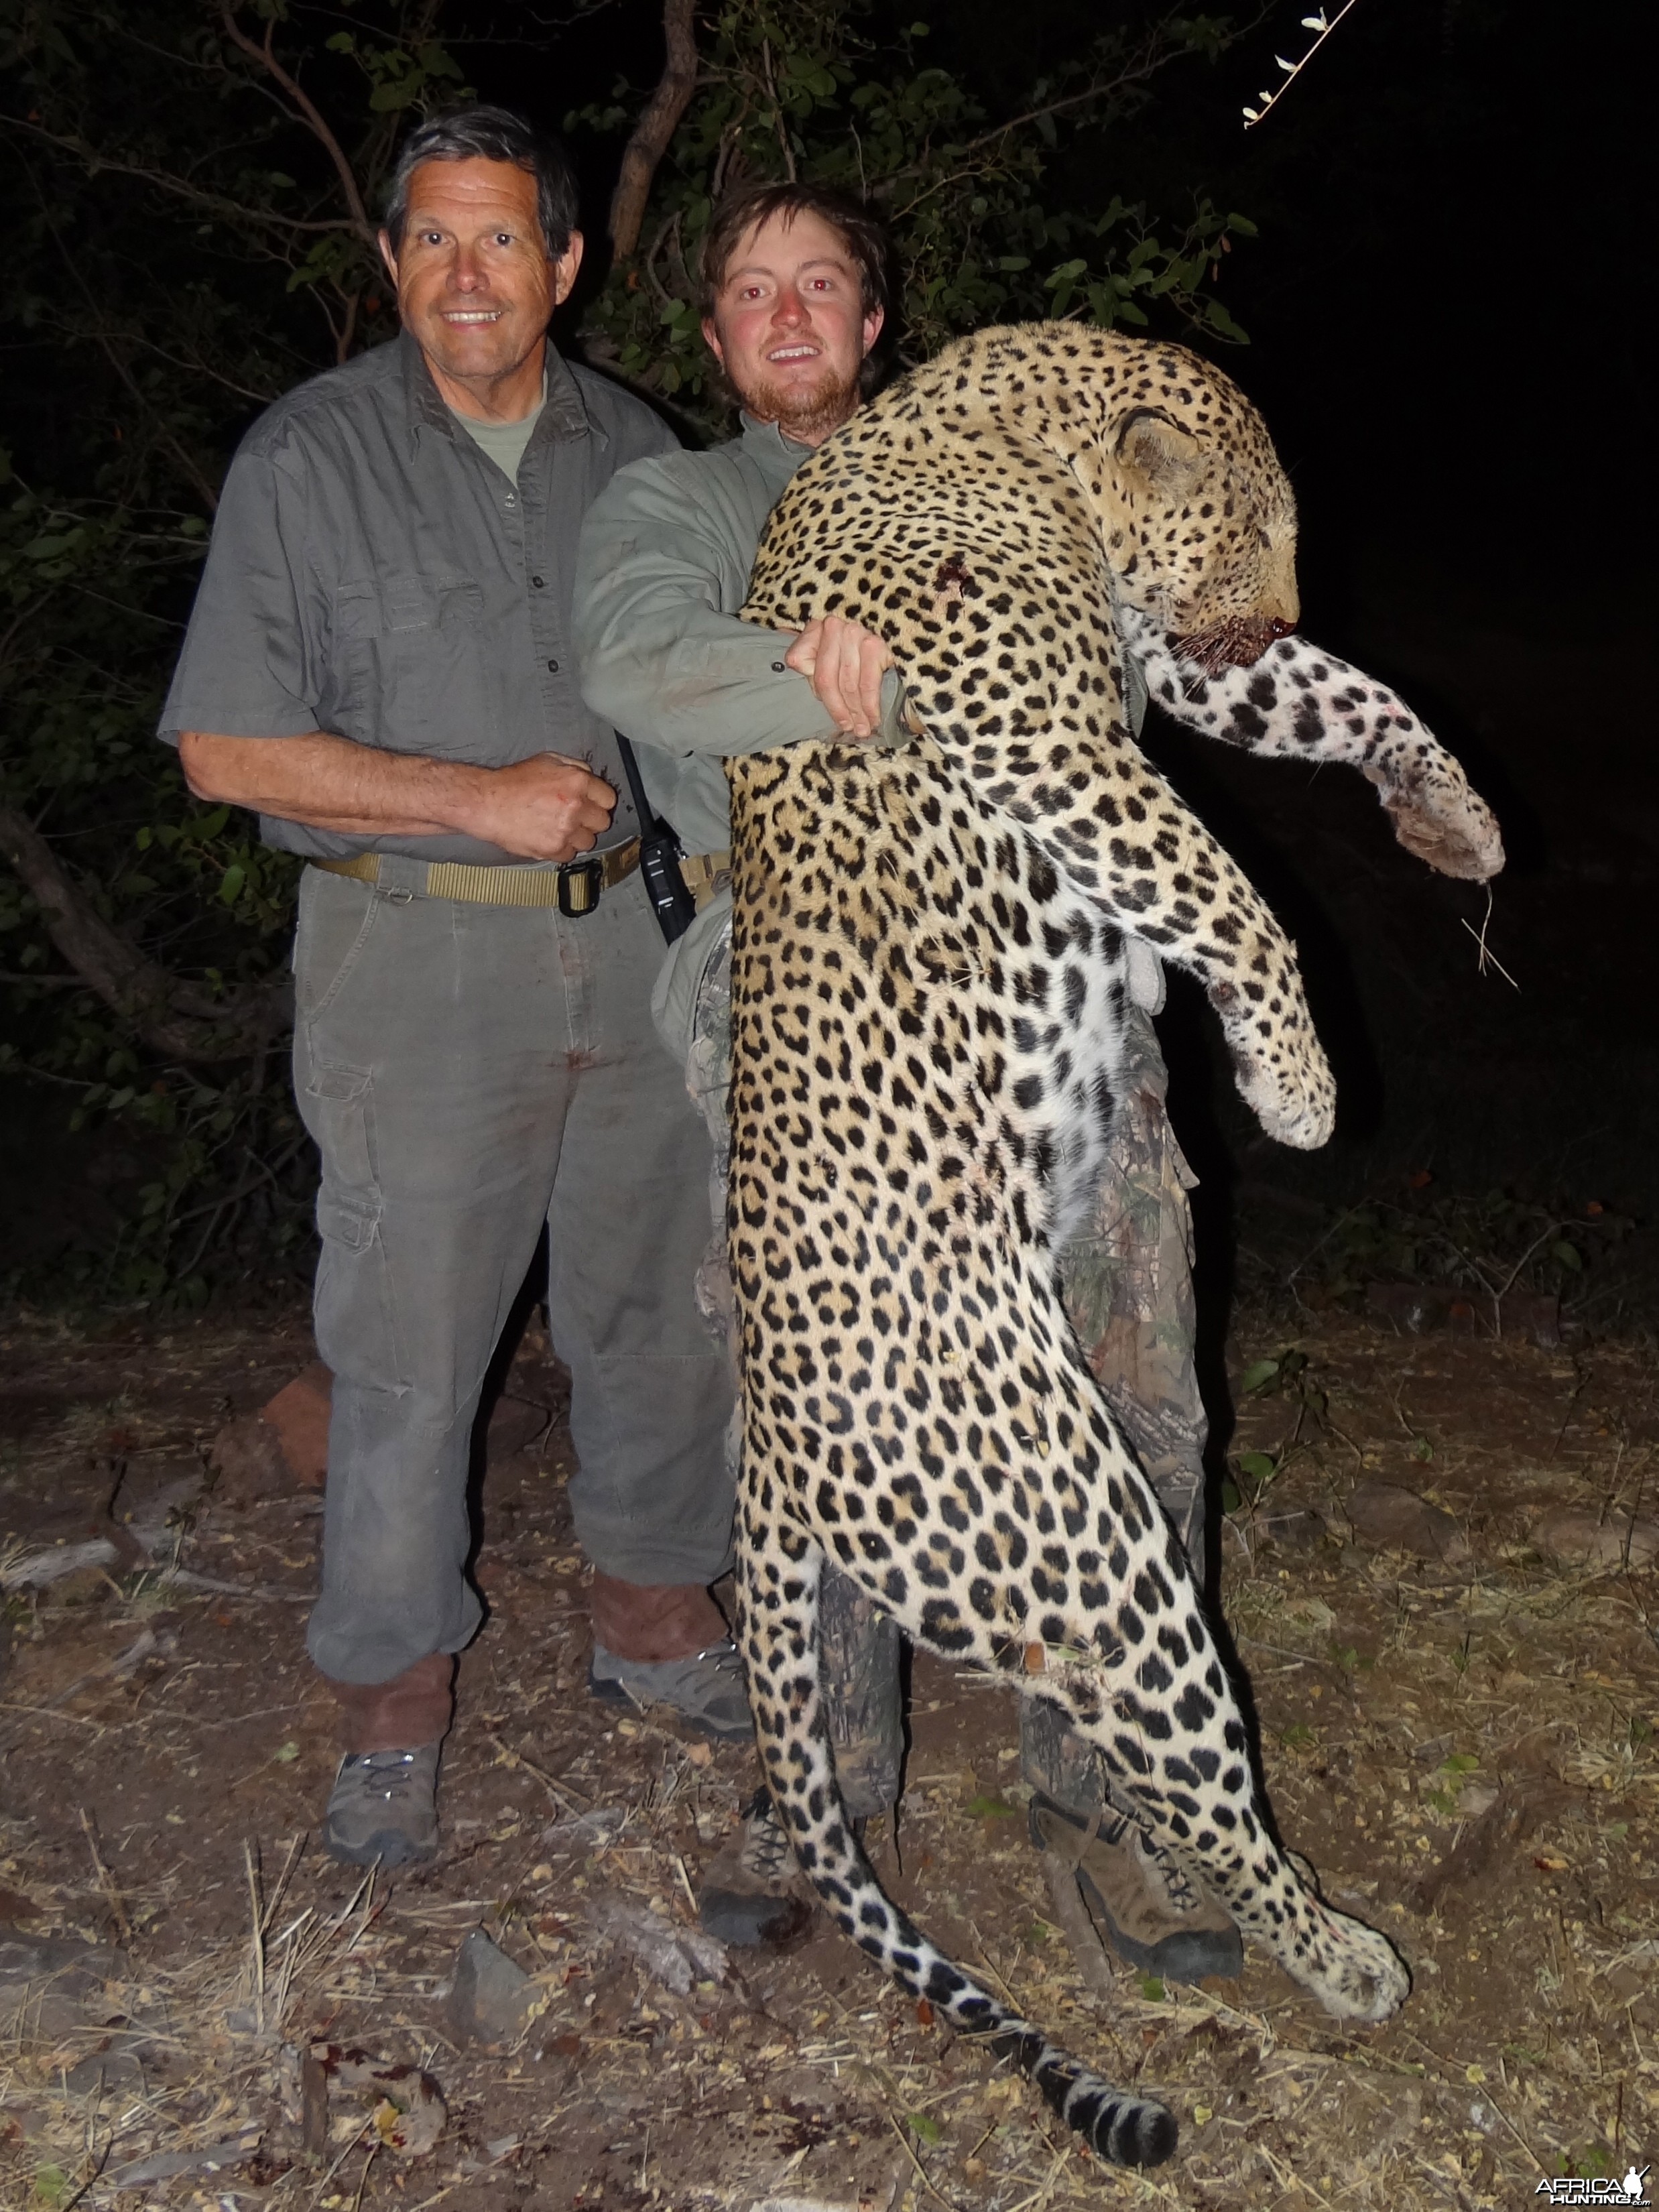 Leopard ~ Limpopo Province, RSA